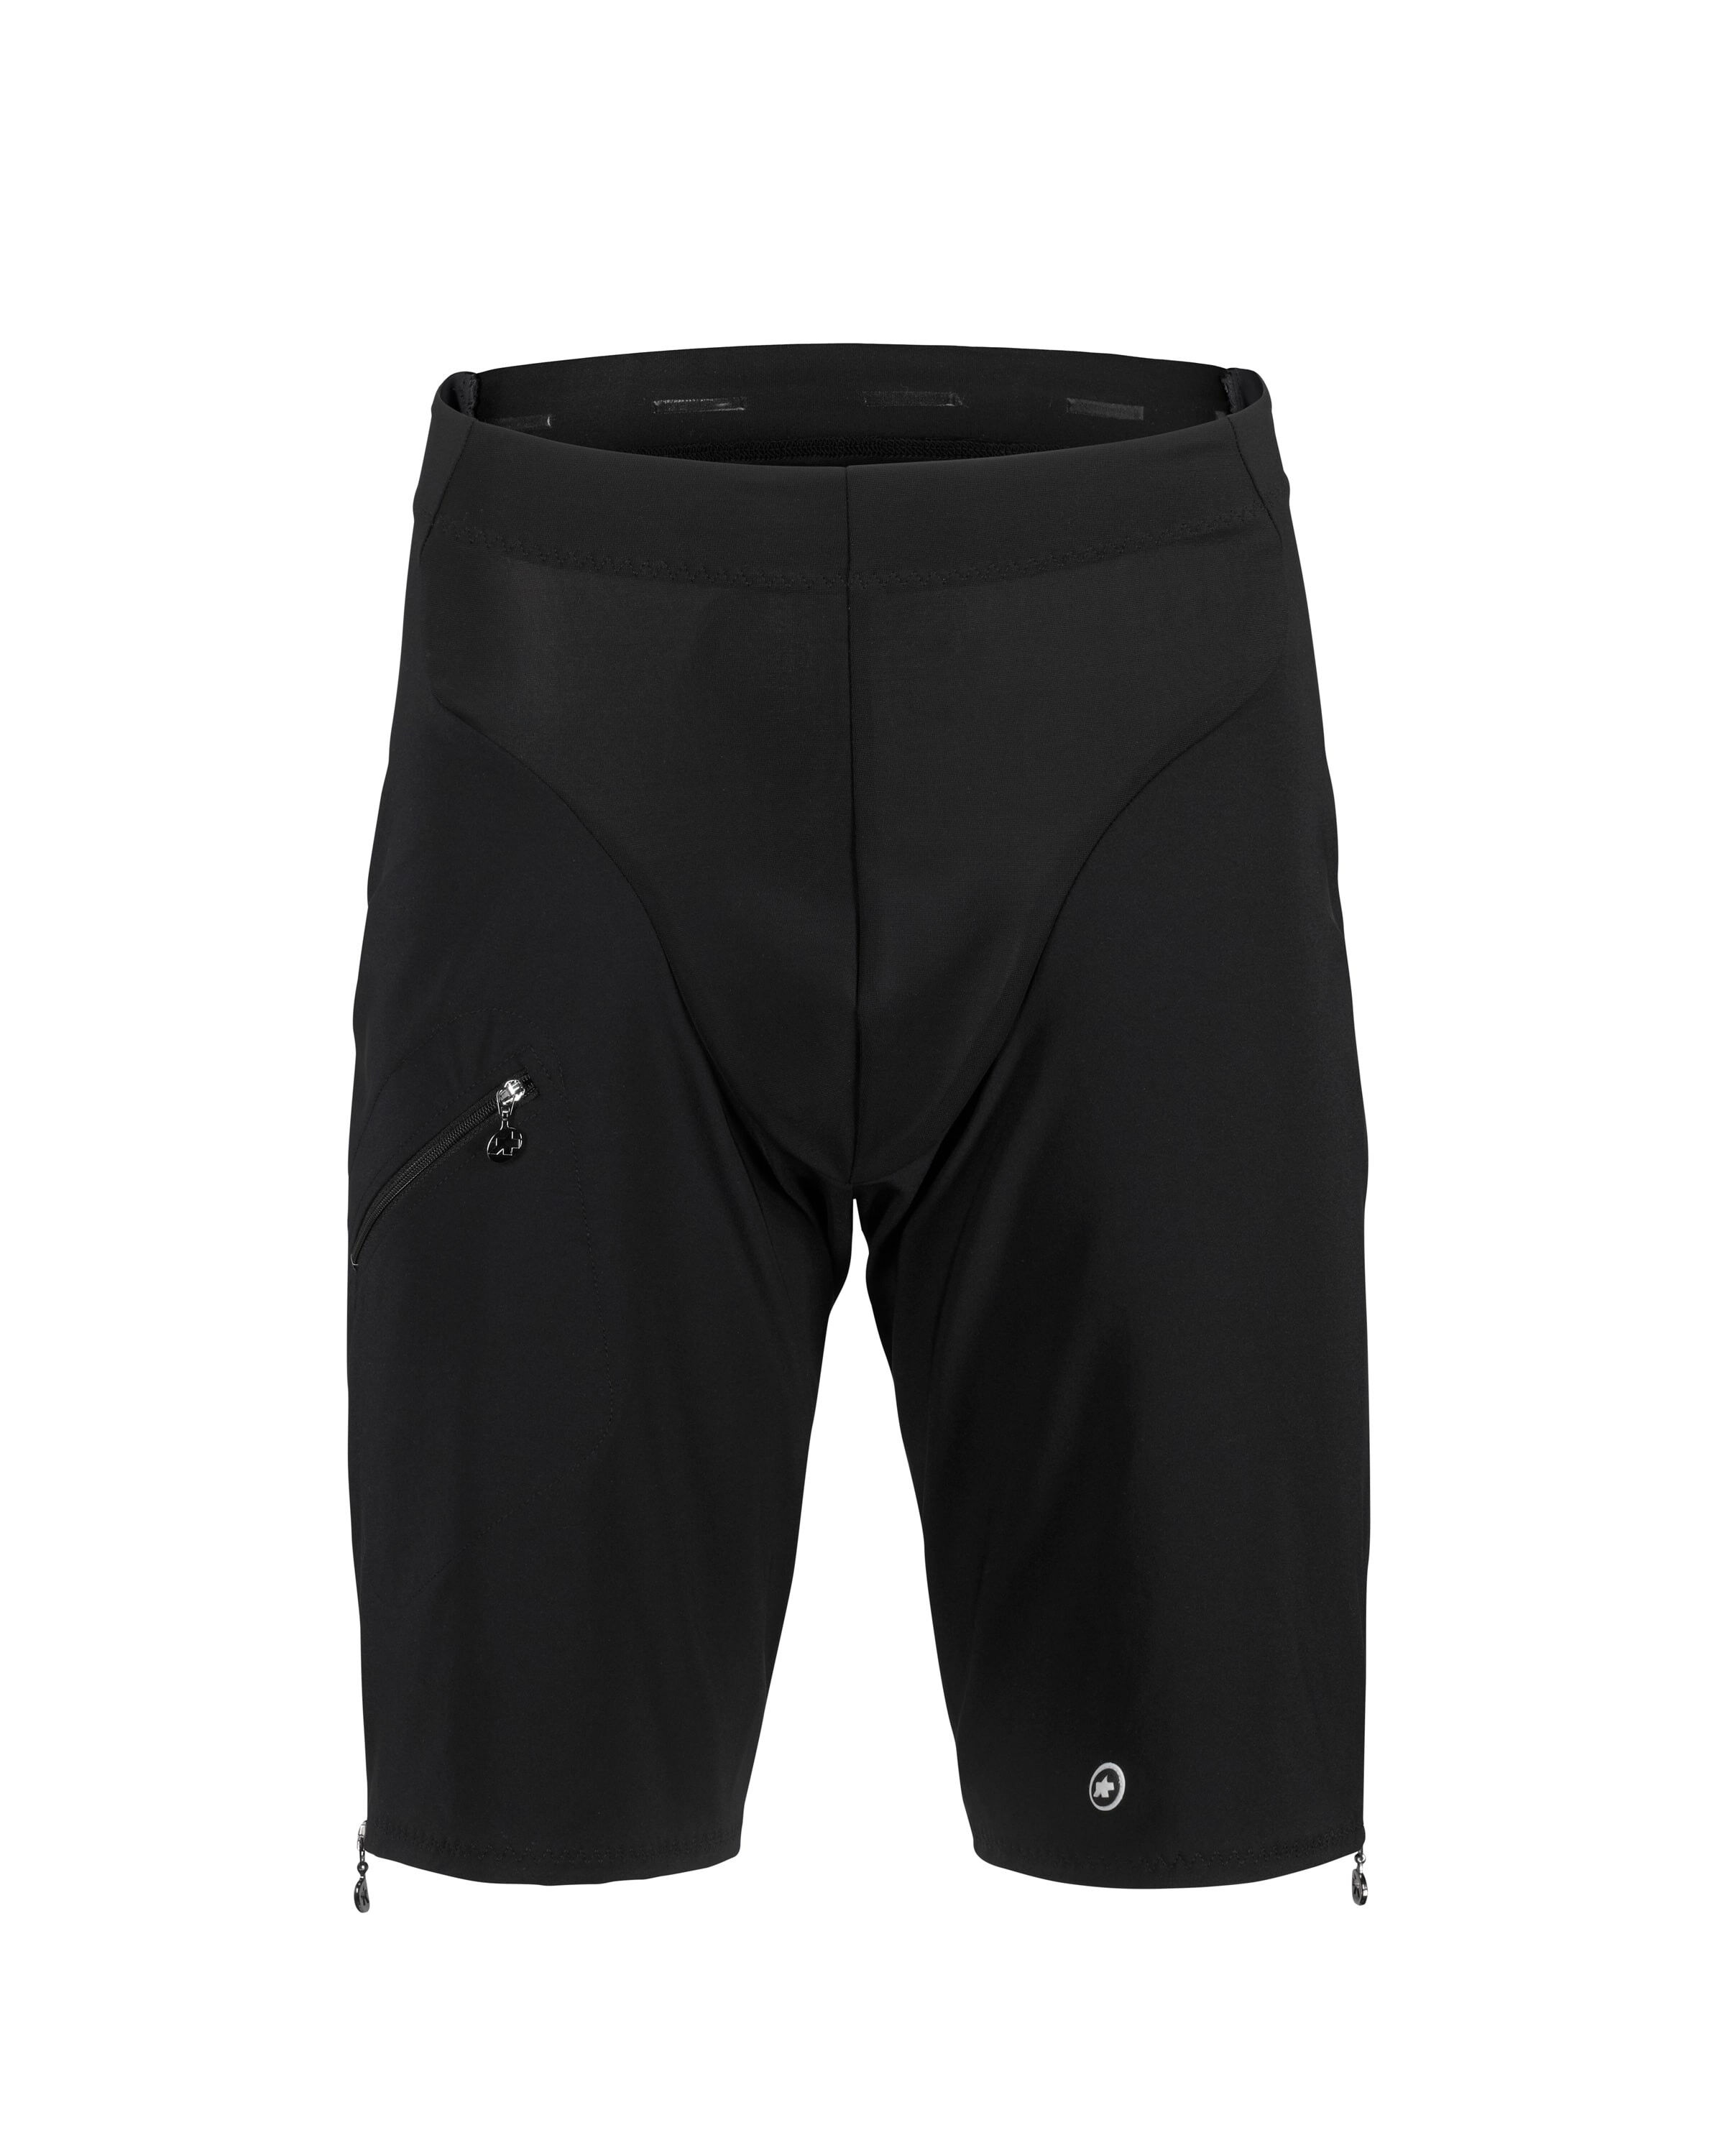 Assos Rally Cargo Shorts - MTB shorts - Men's